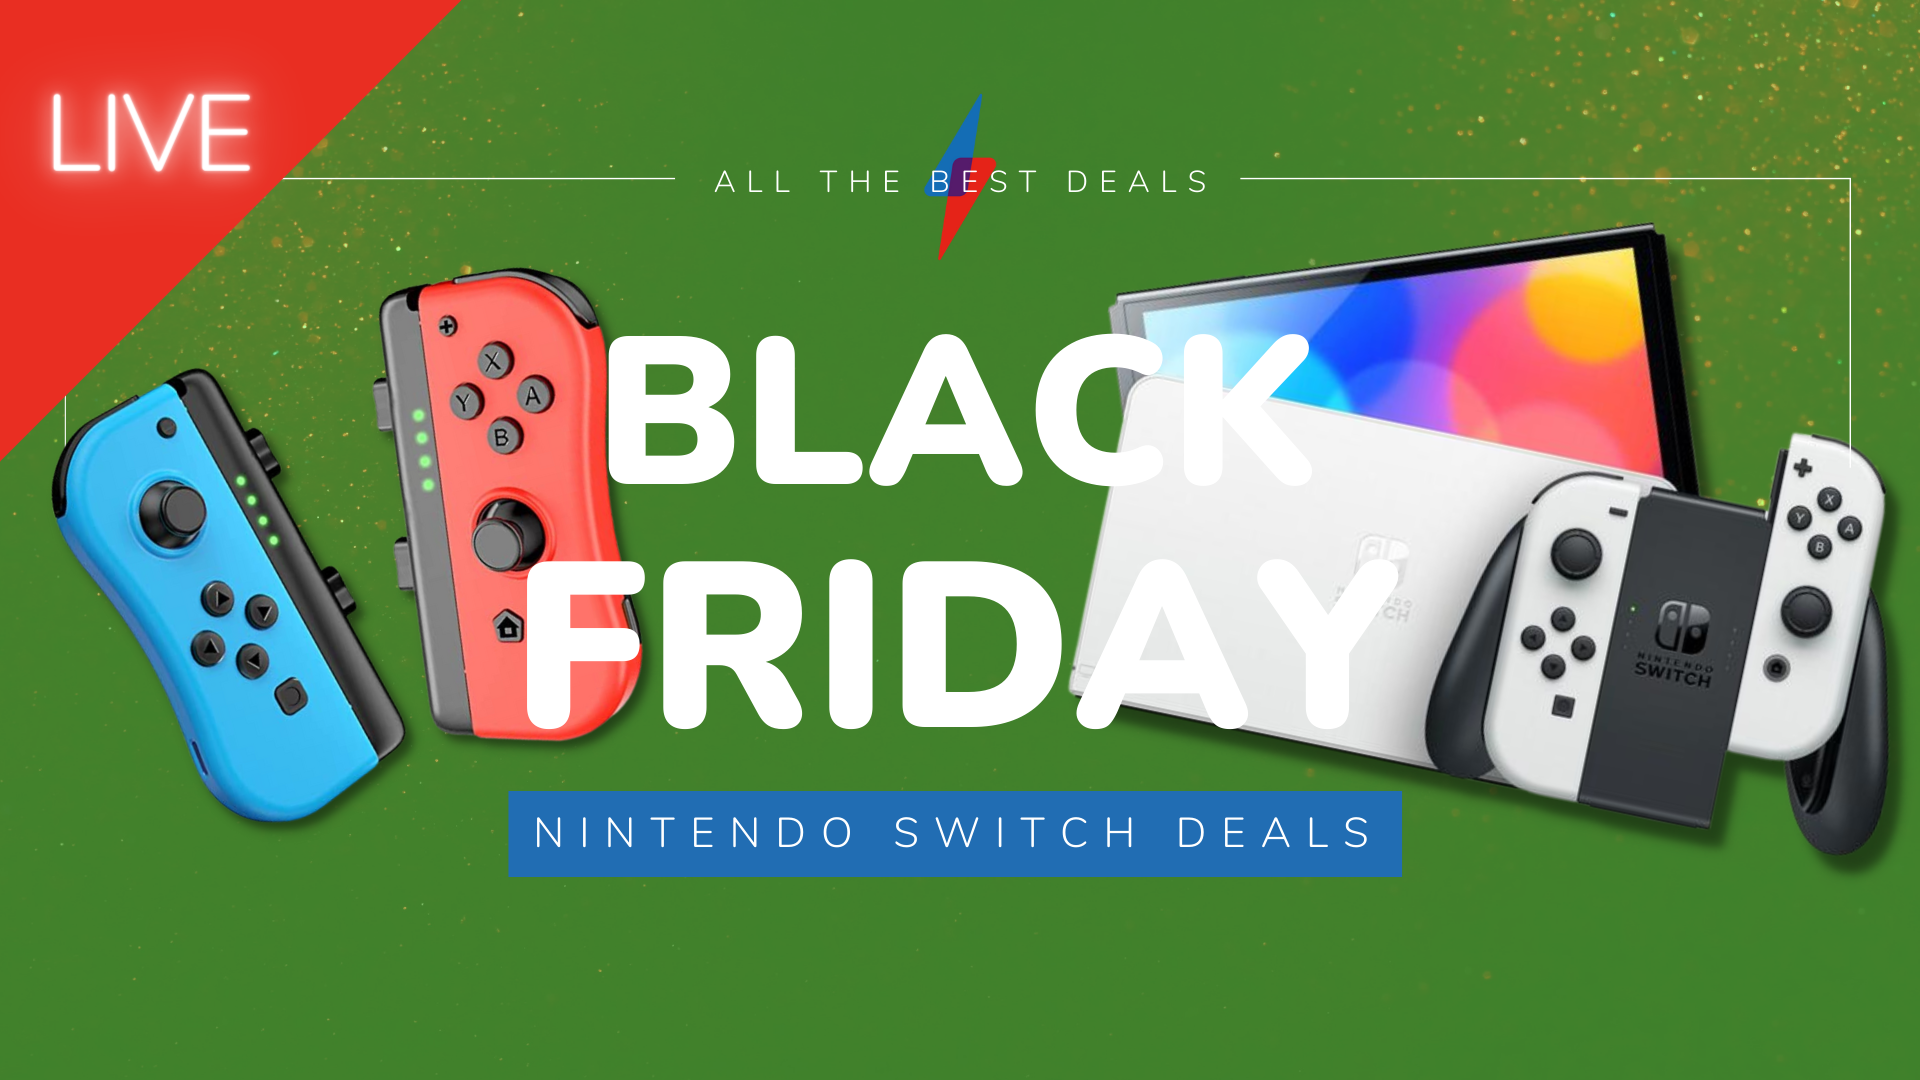 Best Black Friday Nintendo Switch Deals: Save money on bundles and games